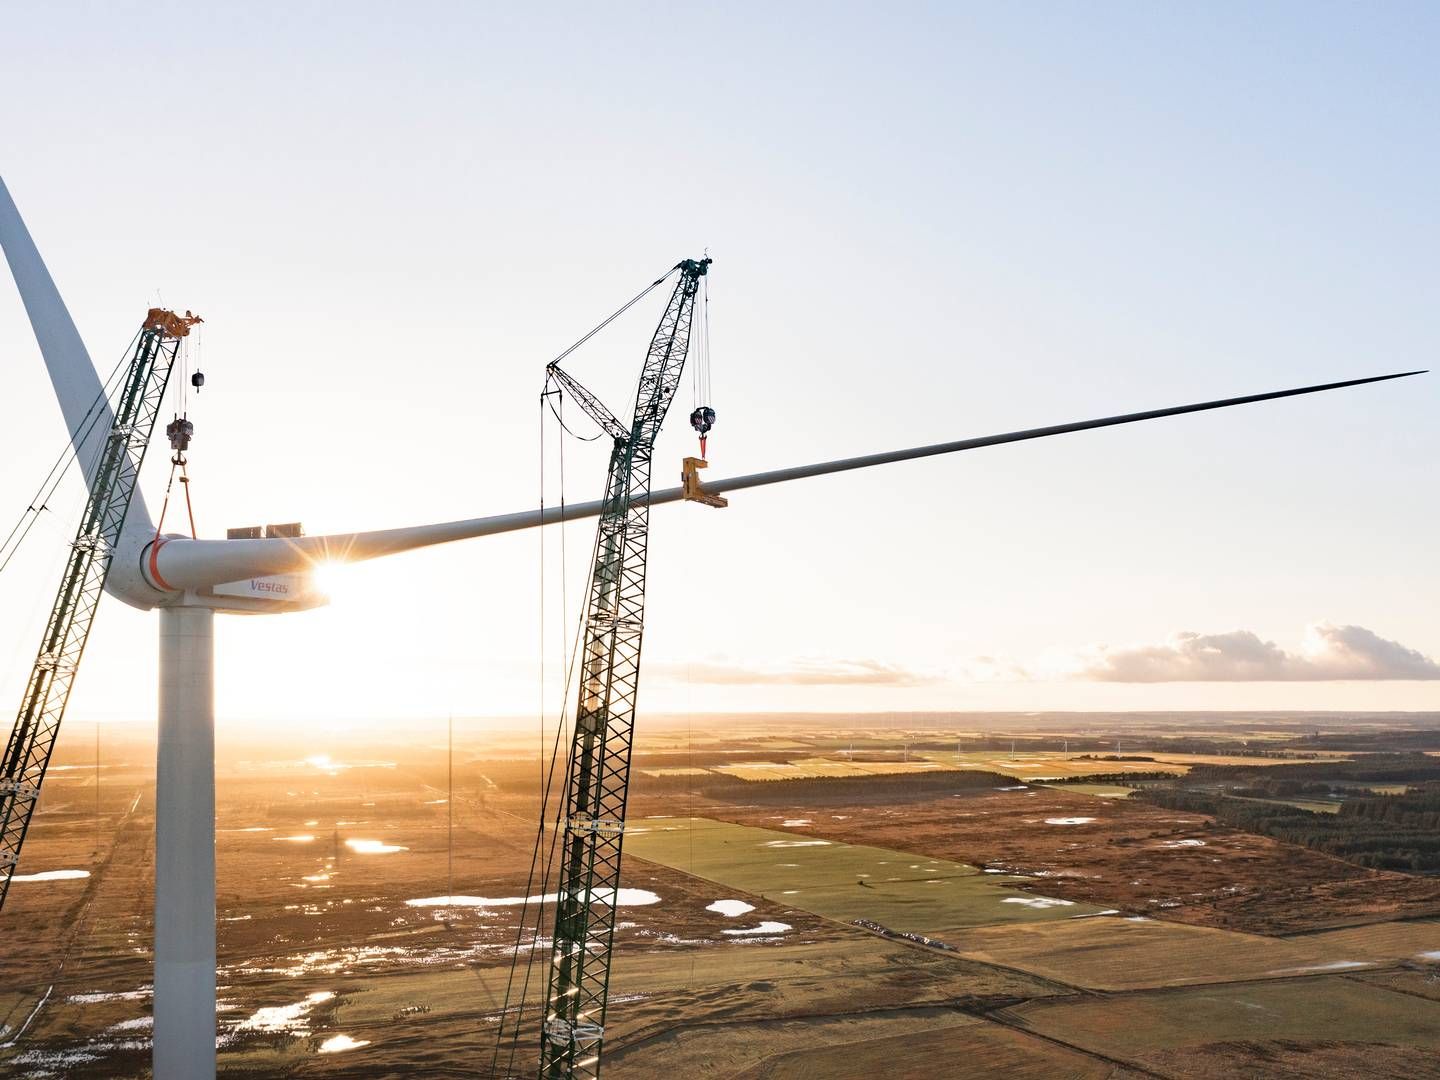 Danish OEM Vestas once again assumes first place as the world's largest wind turbine supplier. | Foto: vestas